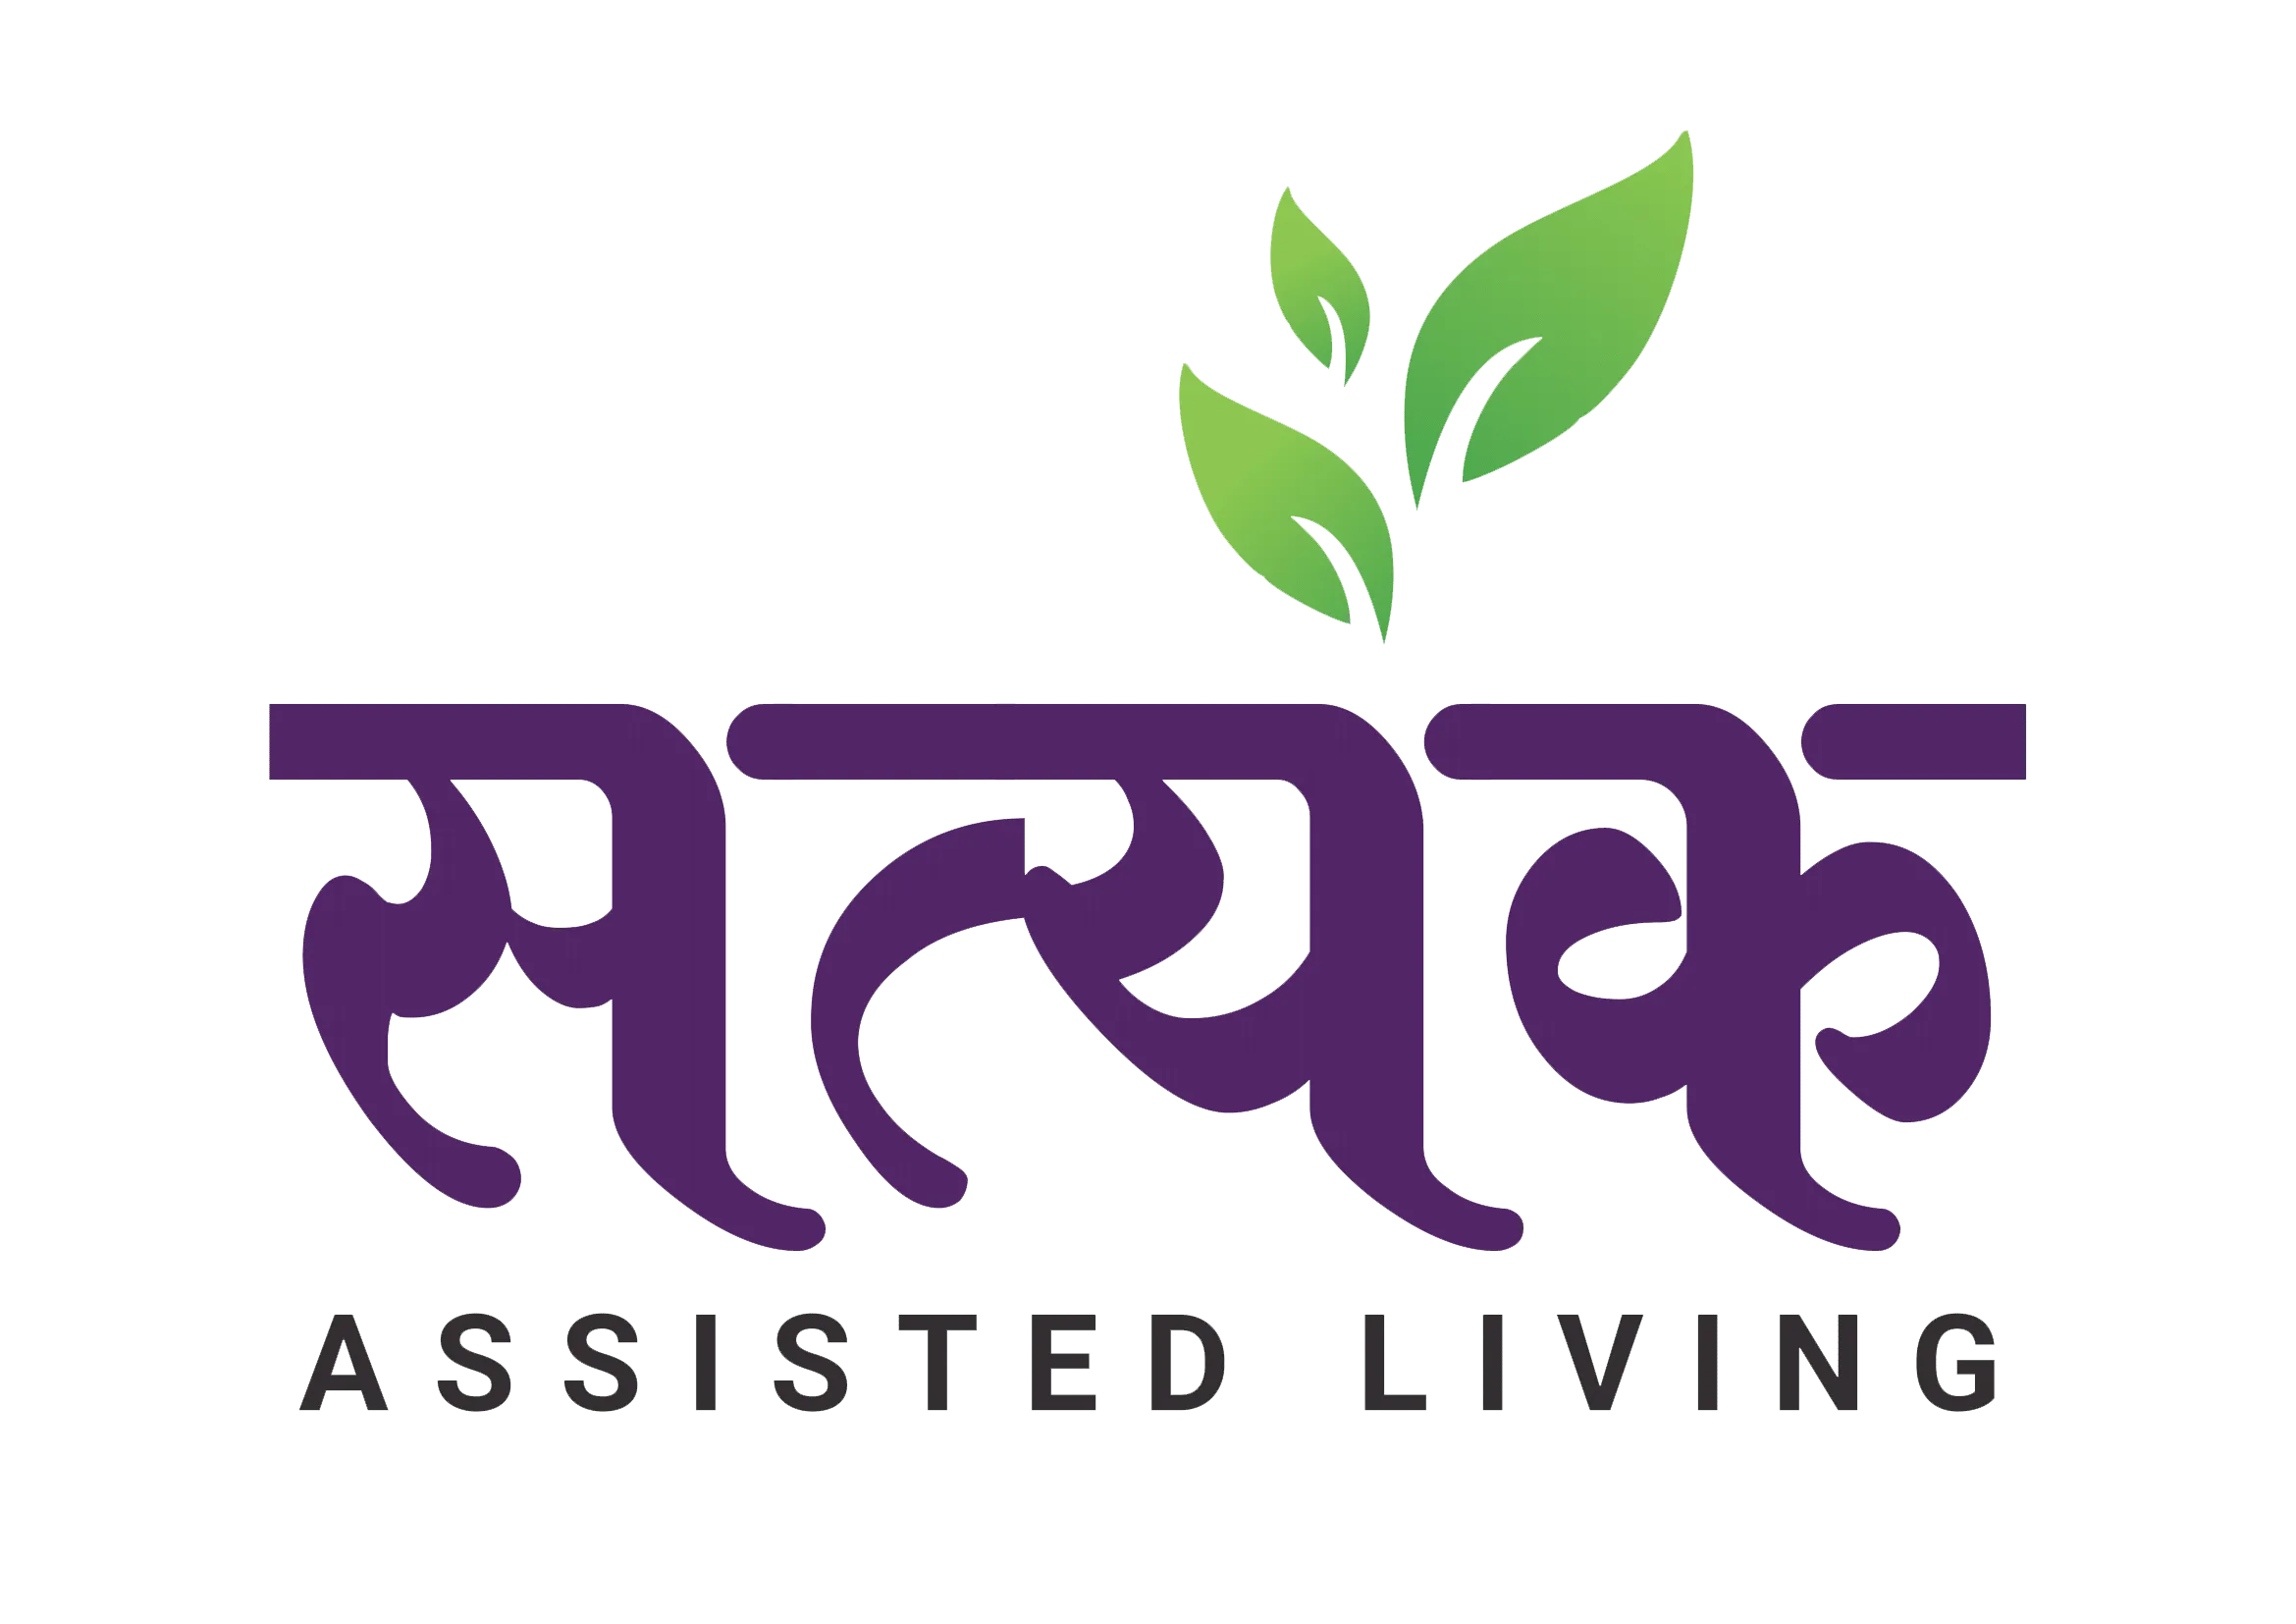 Satyak Assisted Living Pune logo